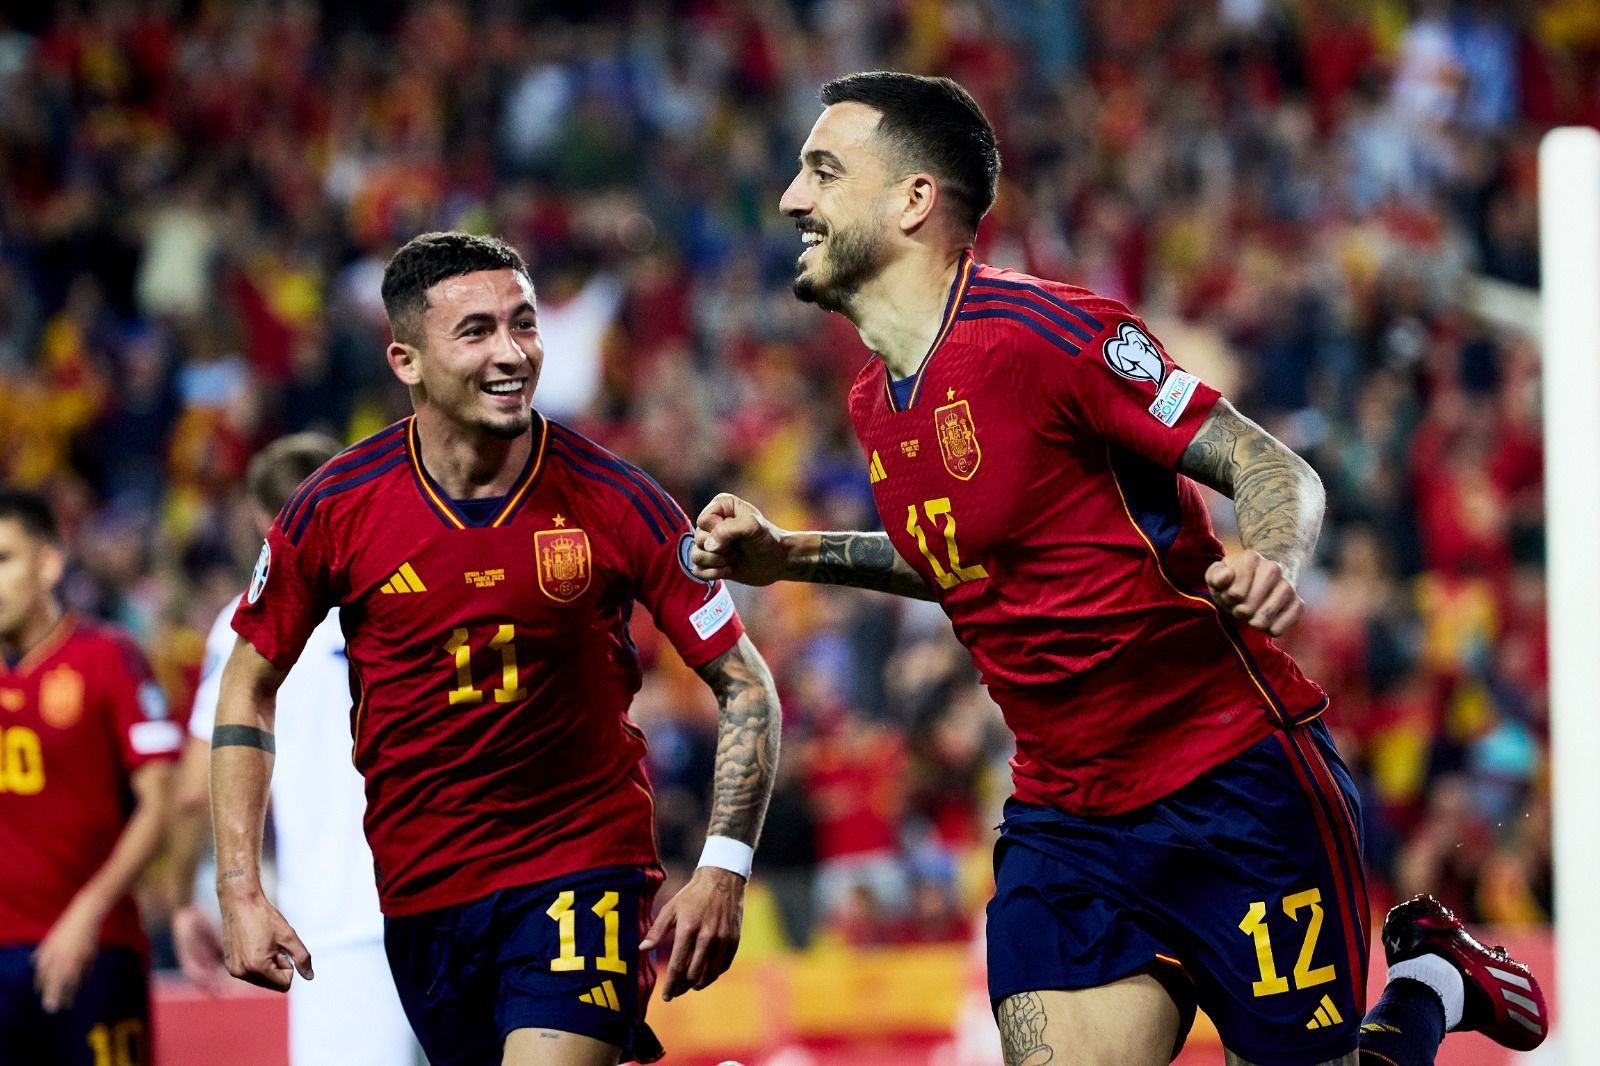 Spanyol diprediksi Sports Mole akan menang yipis 2-1 atas Skotlandia